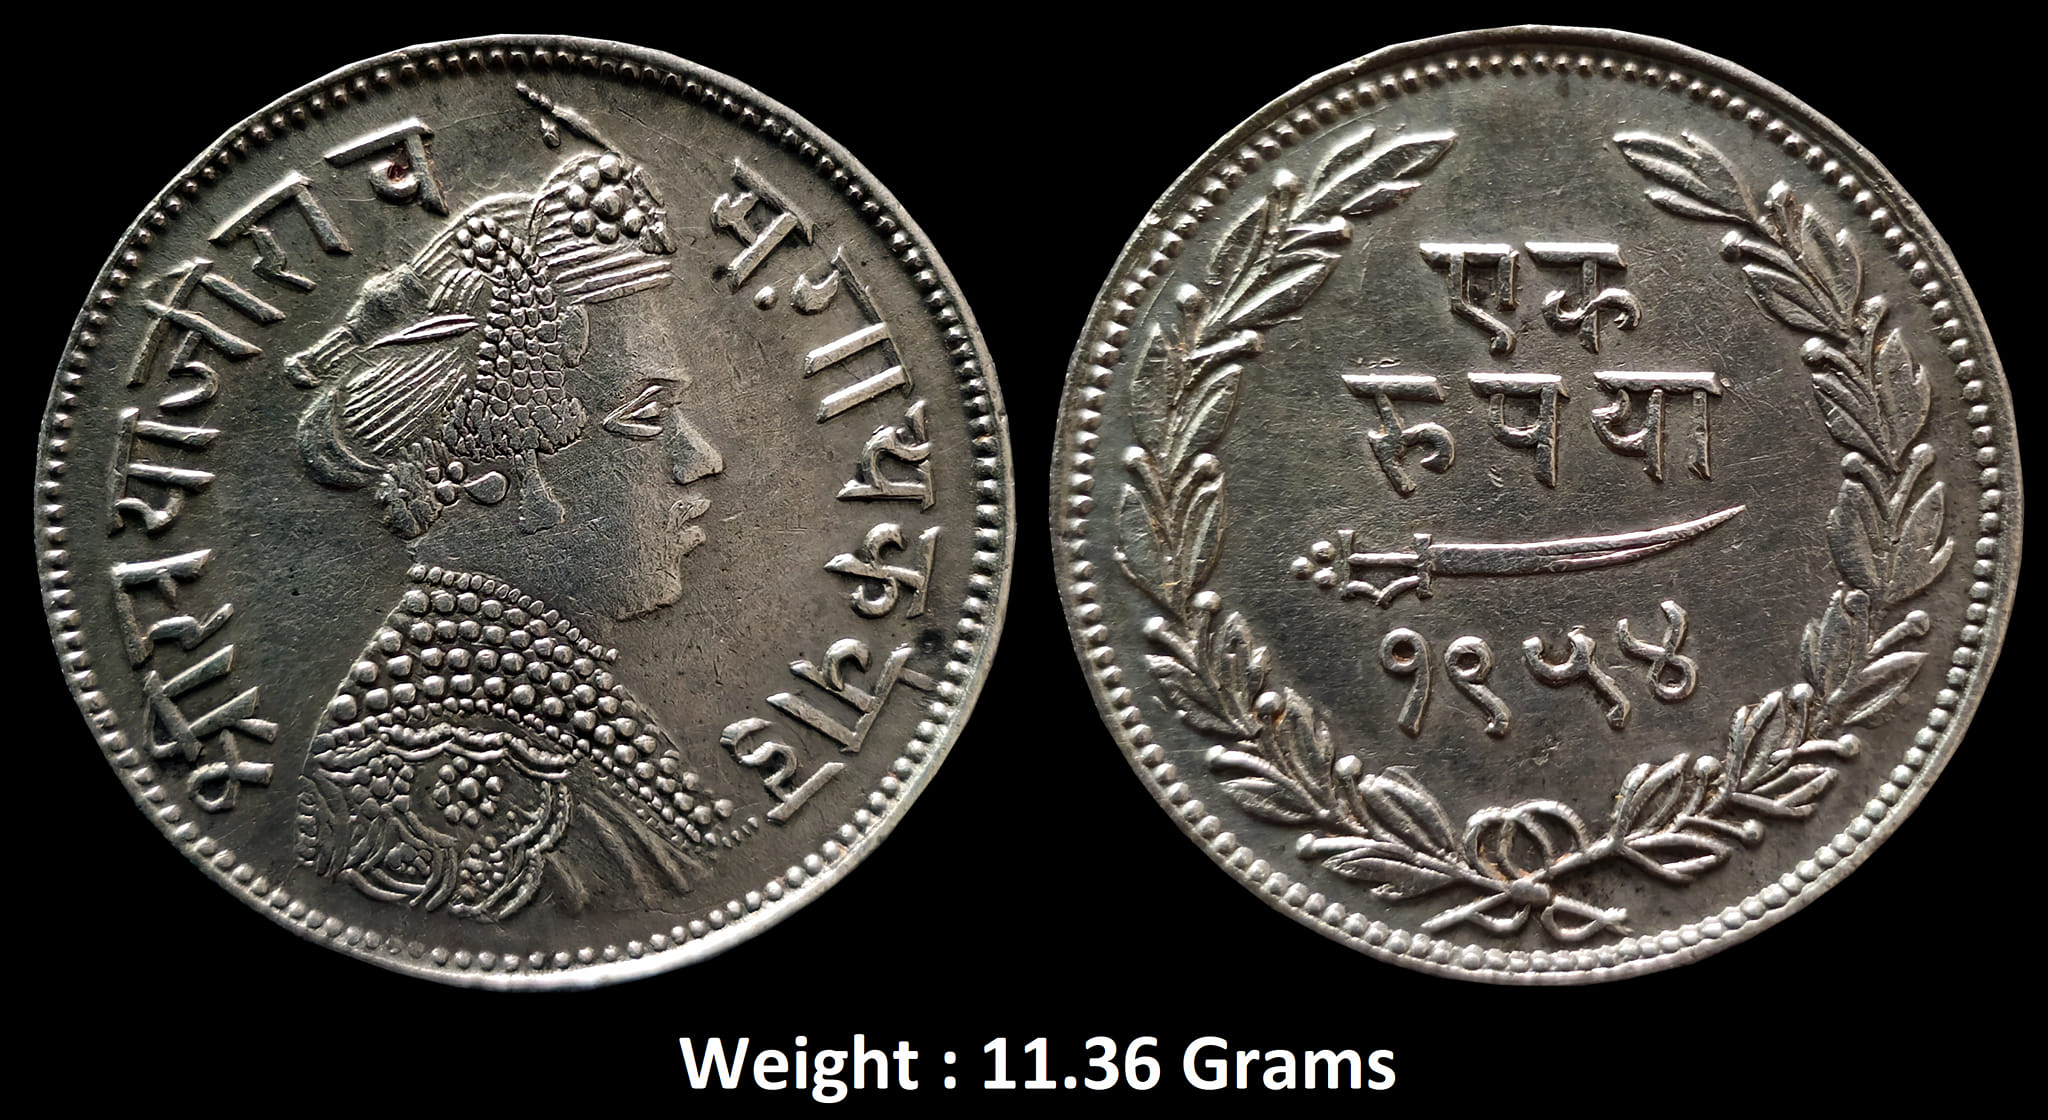 PRINCELY STATE - BARODA
Sayaji Rao III, High Grade Silver Rupee,
Broad flan, VS 1954 (KM Y36).
About Very Fine. Rare
( پرنسلی سٹیٹ - بڑودہ
سیاجی راؤ III، سلور روپیہ، براڈ فلان، بمقام 1954)
Weight : 11.36 Grams